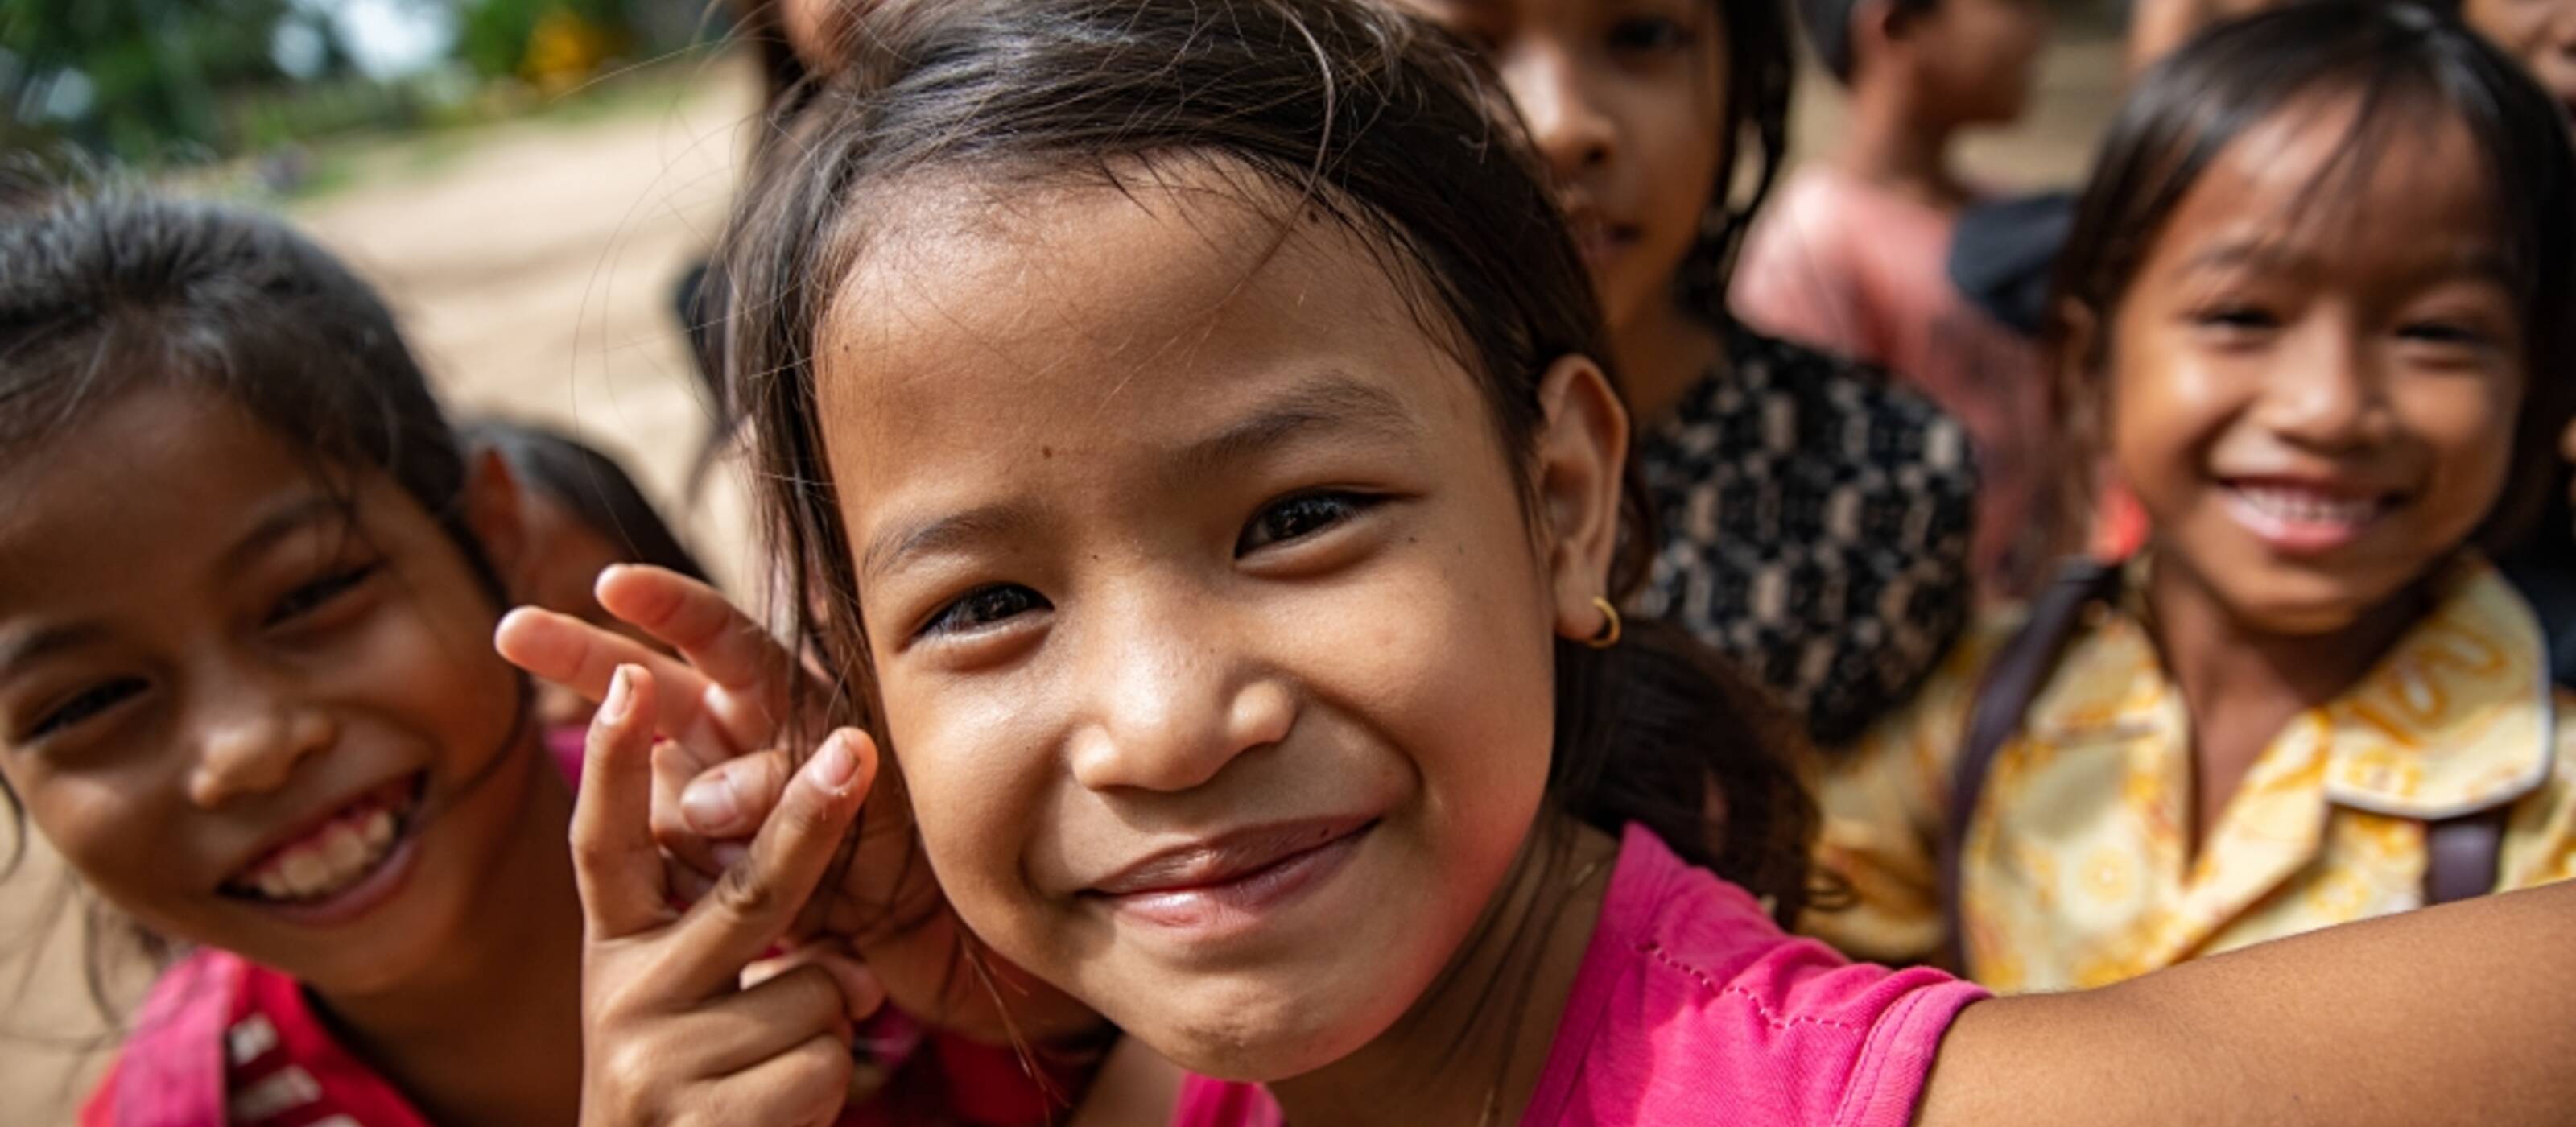 Children in Neak Loeung, Cambodia 